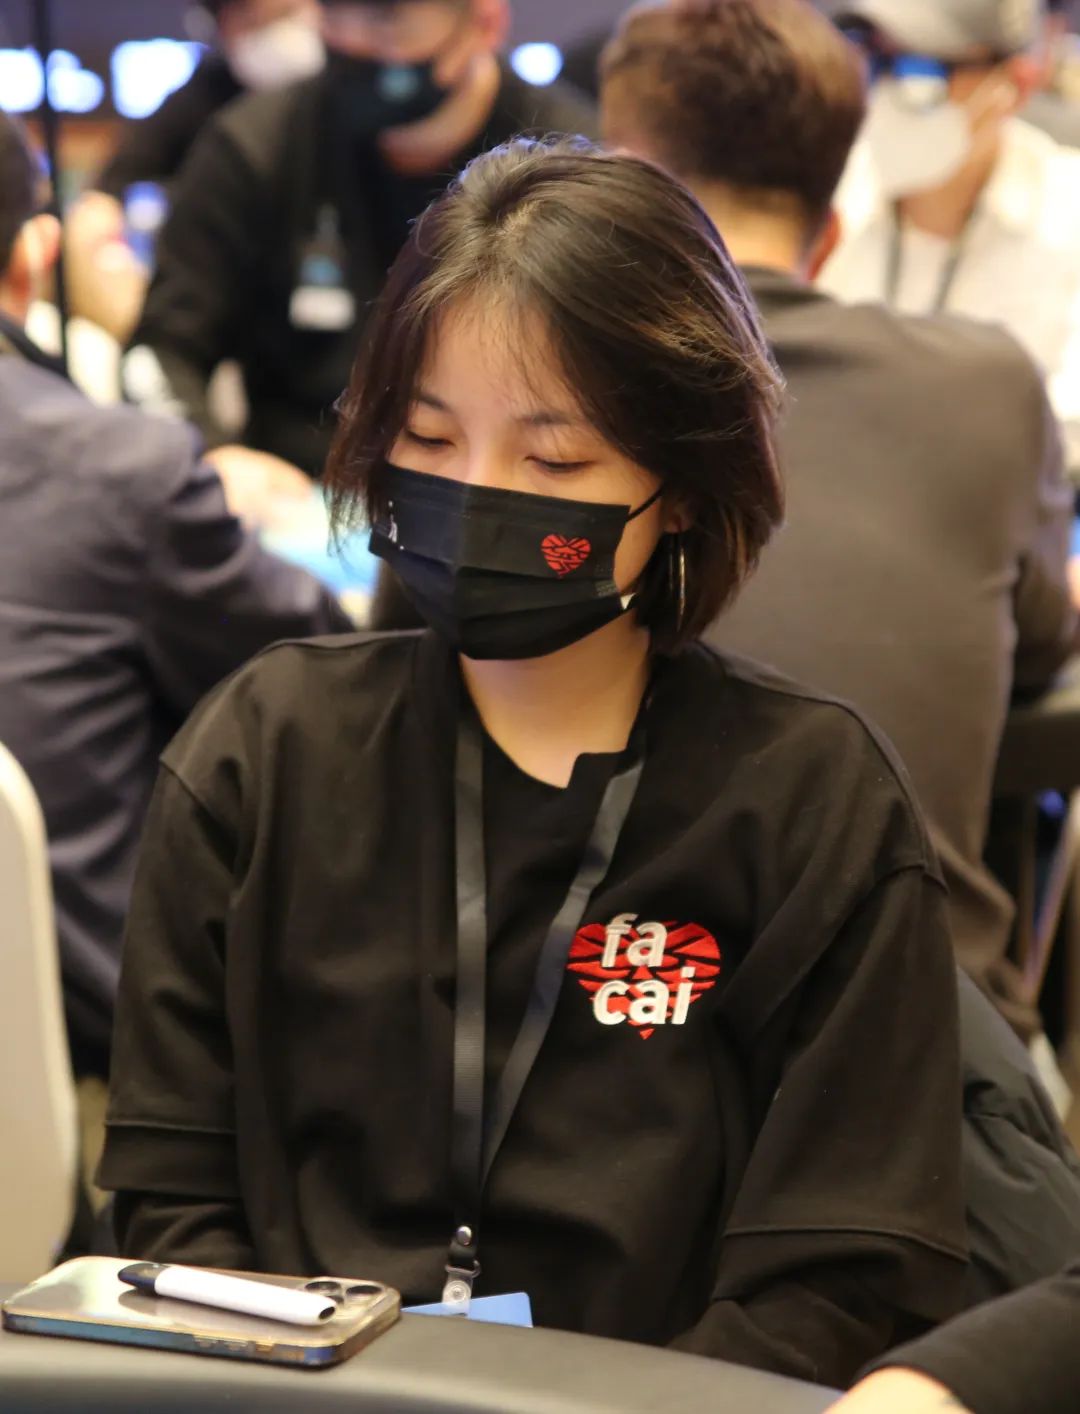 【EV 扑克】CPG 十周年上海选拔赛 | 人数翻倍！主赛 B 组参赛人数 614 人，朱宏成为全场 CL!